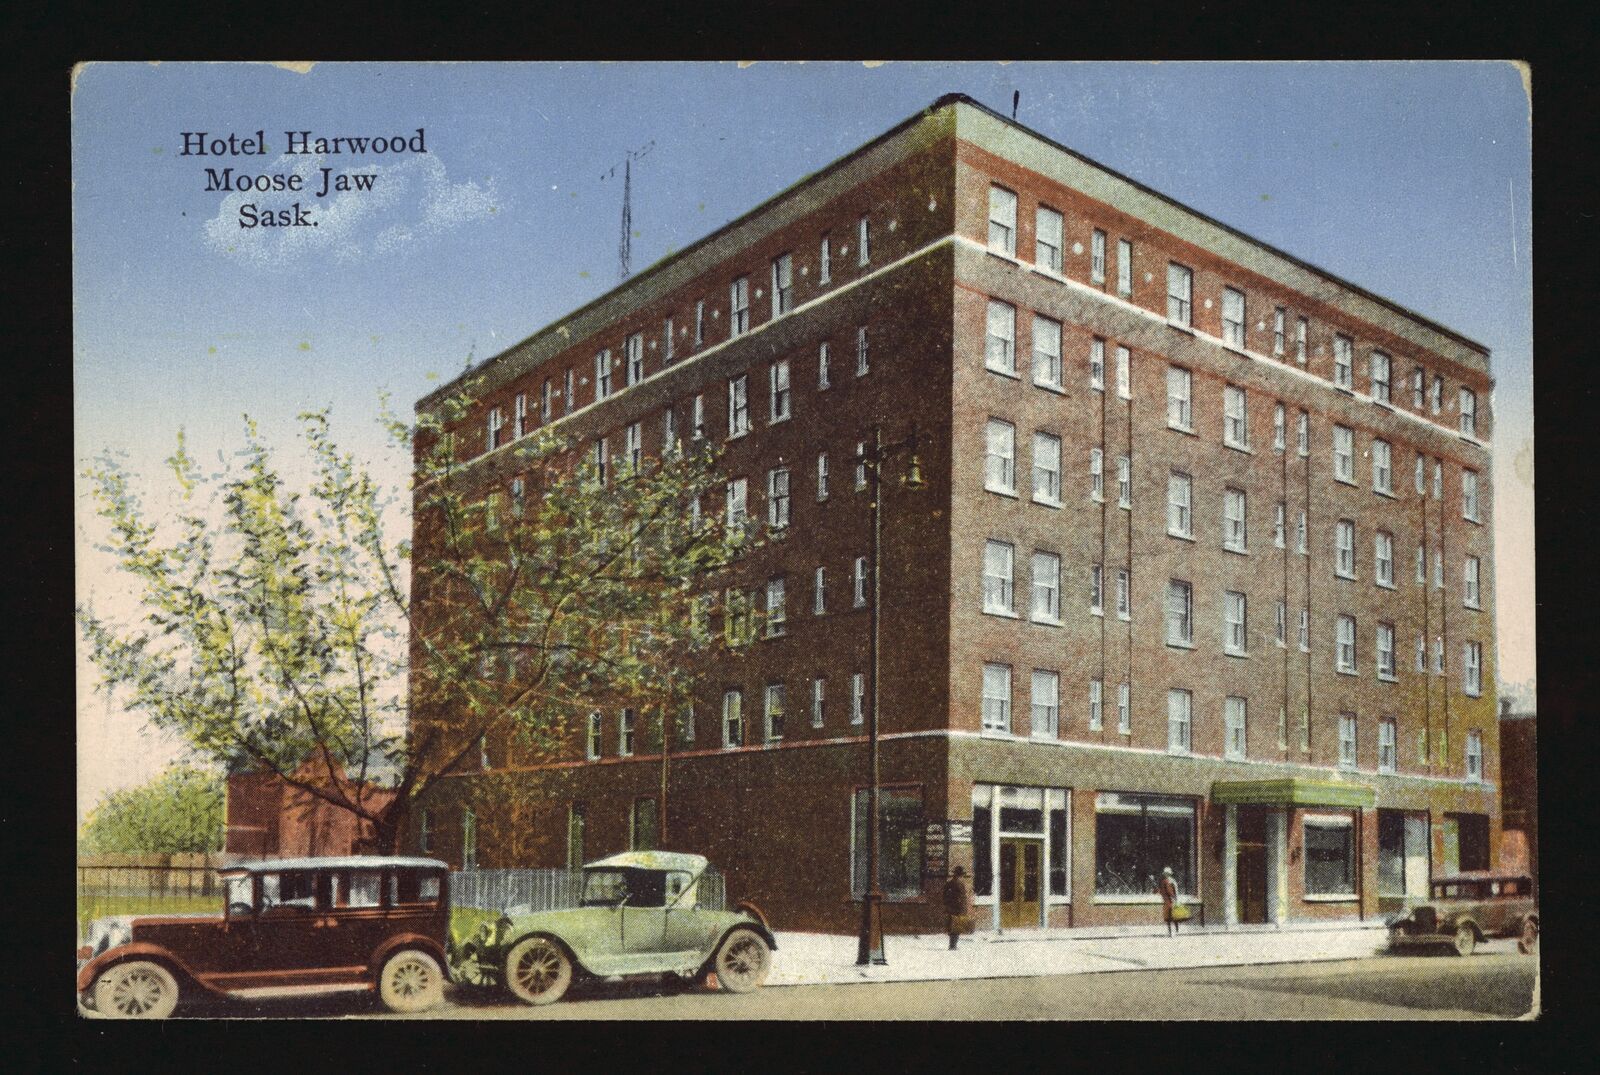 Hotel Harwood Moose Jaw Saskatchewan, View of a large brick hospit- Old Photo